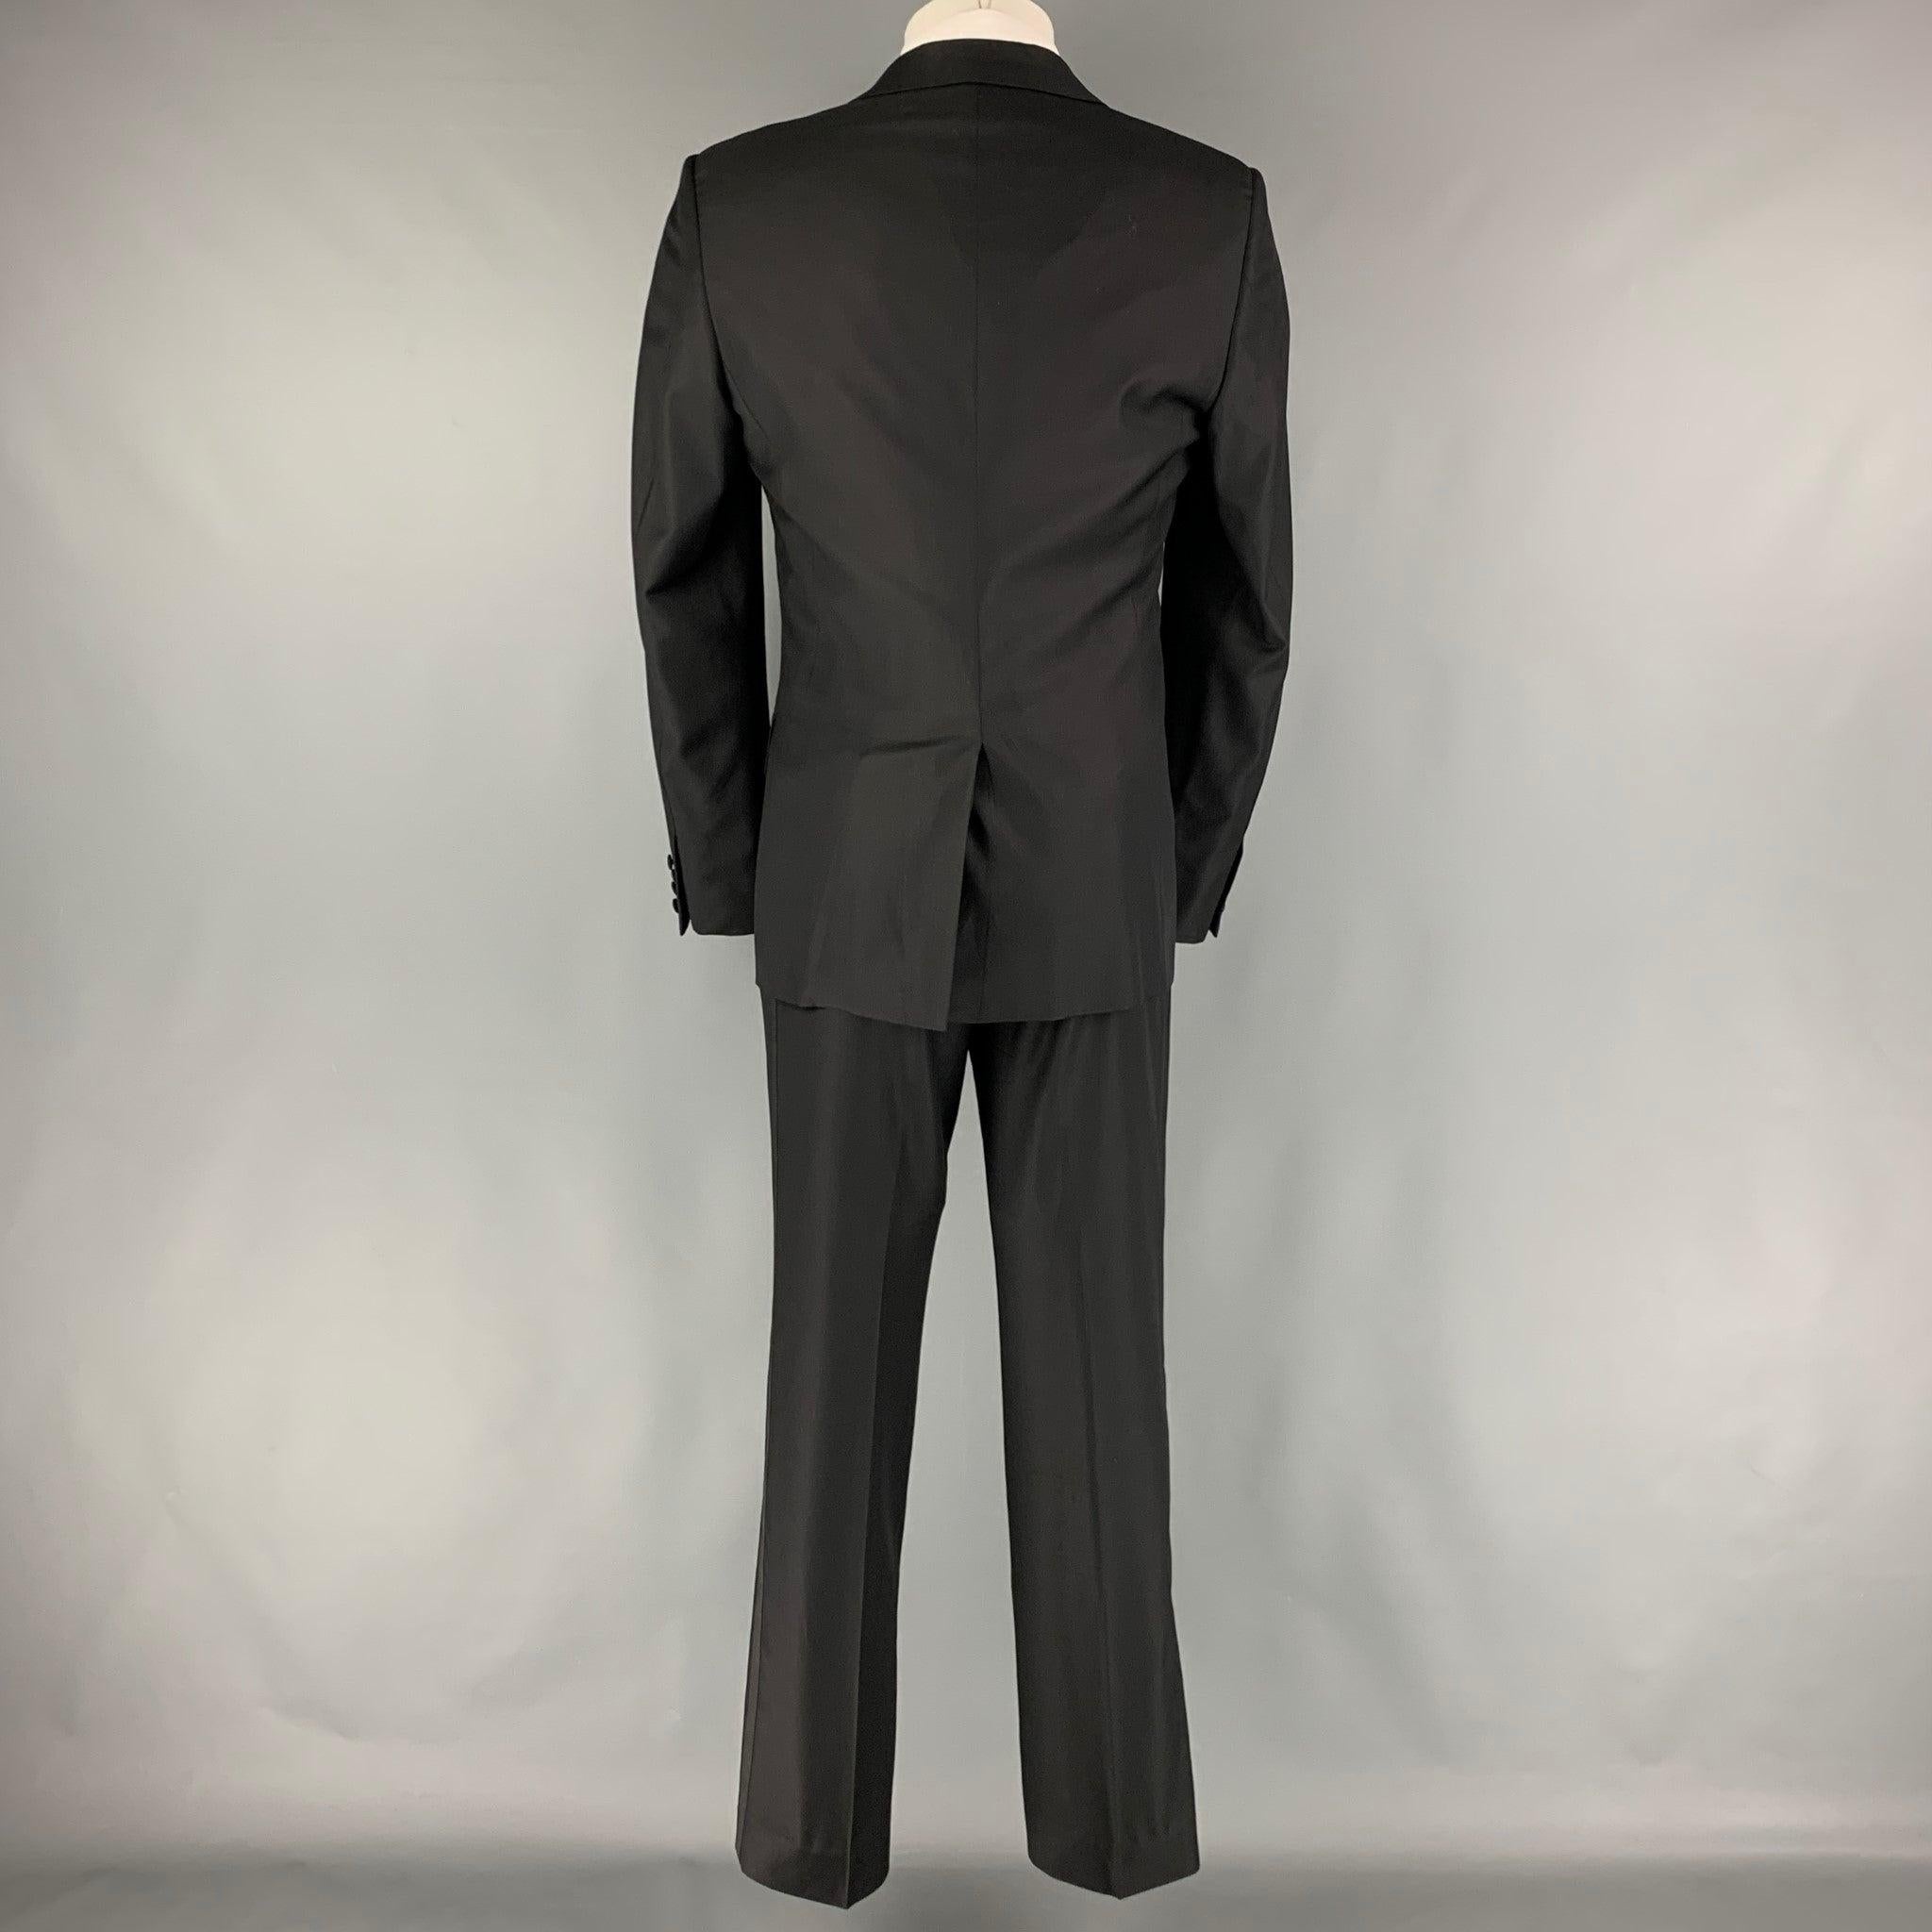 CALVIN KLEIN COLLECTION Size 38 Black Solid Wool Peak Lapel 32 32 Tuxedo For Sale 1